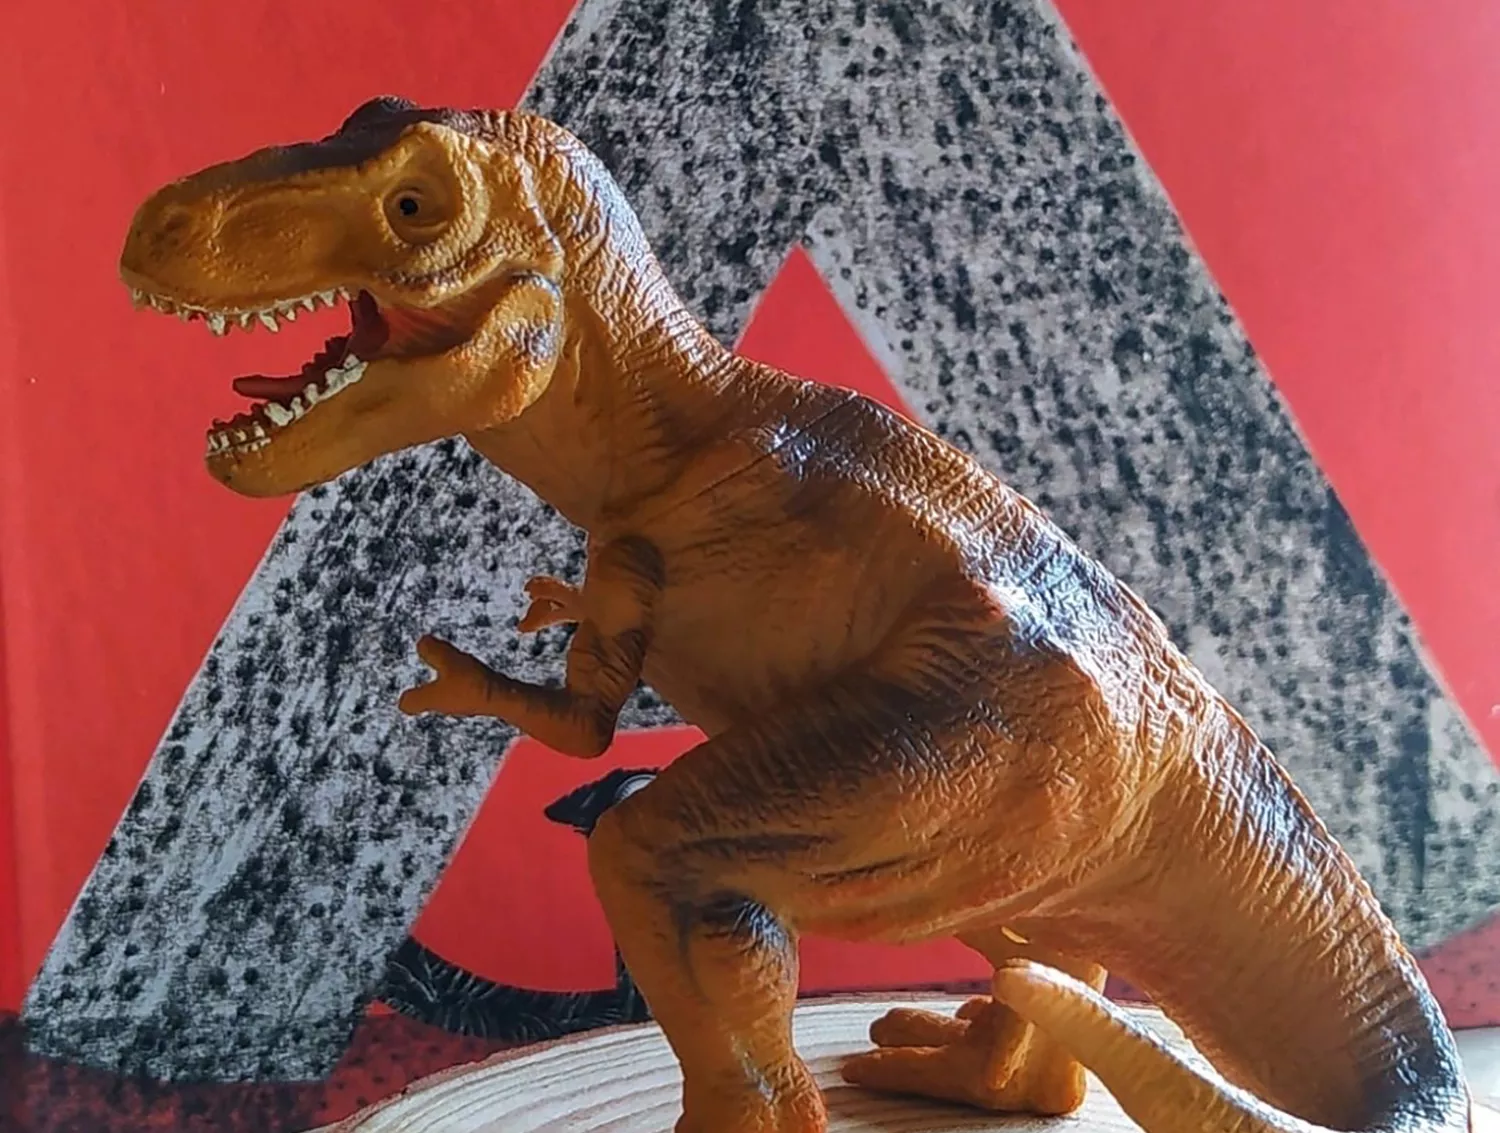 El Museo Munic de Carracedelo organiza un taller de creación de dinosaurios este 'finde'